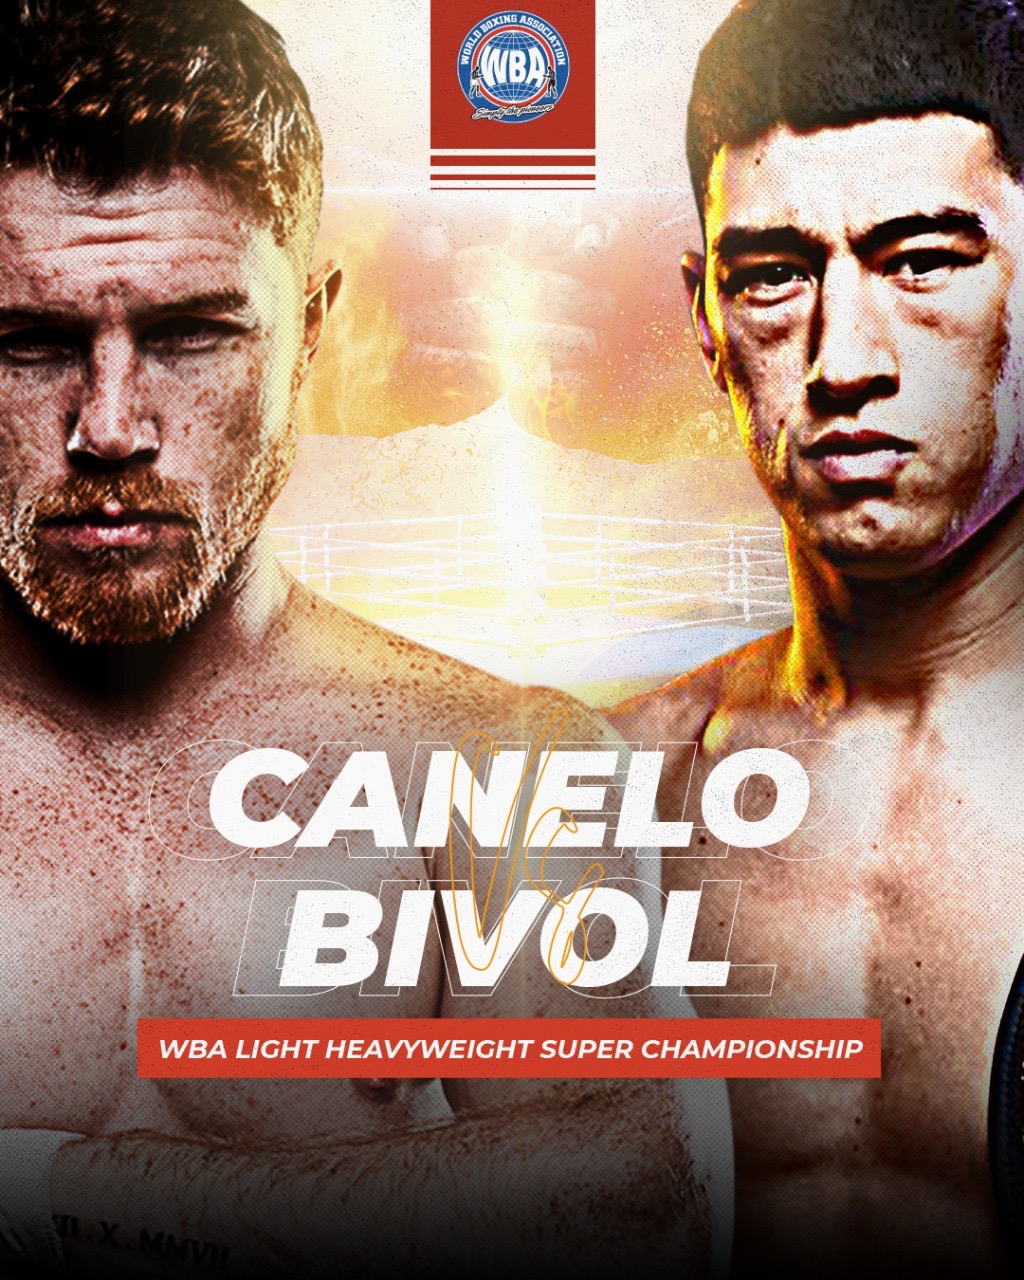 Canelo will challenge Bivol for WBA light heavyweight championship 